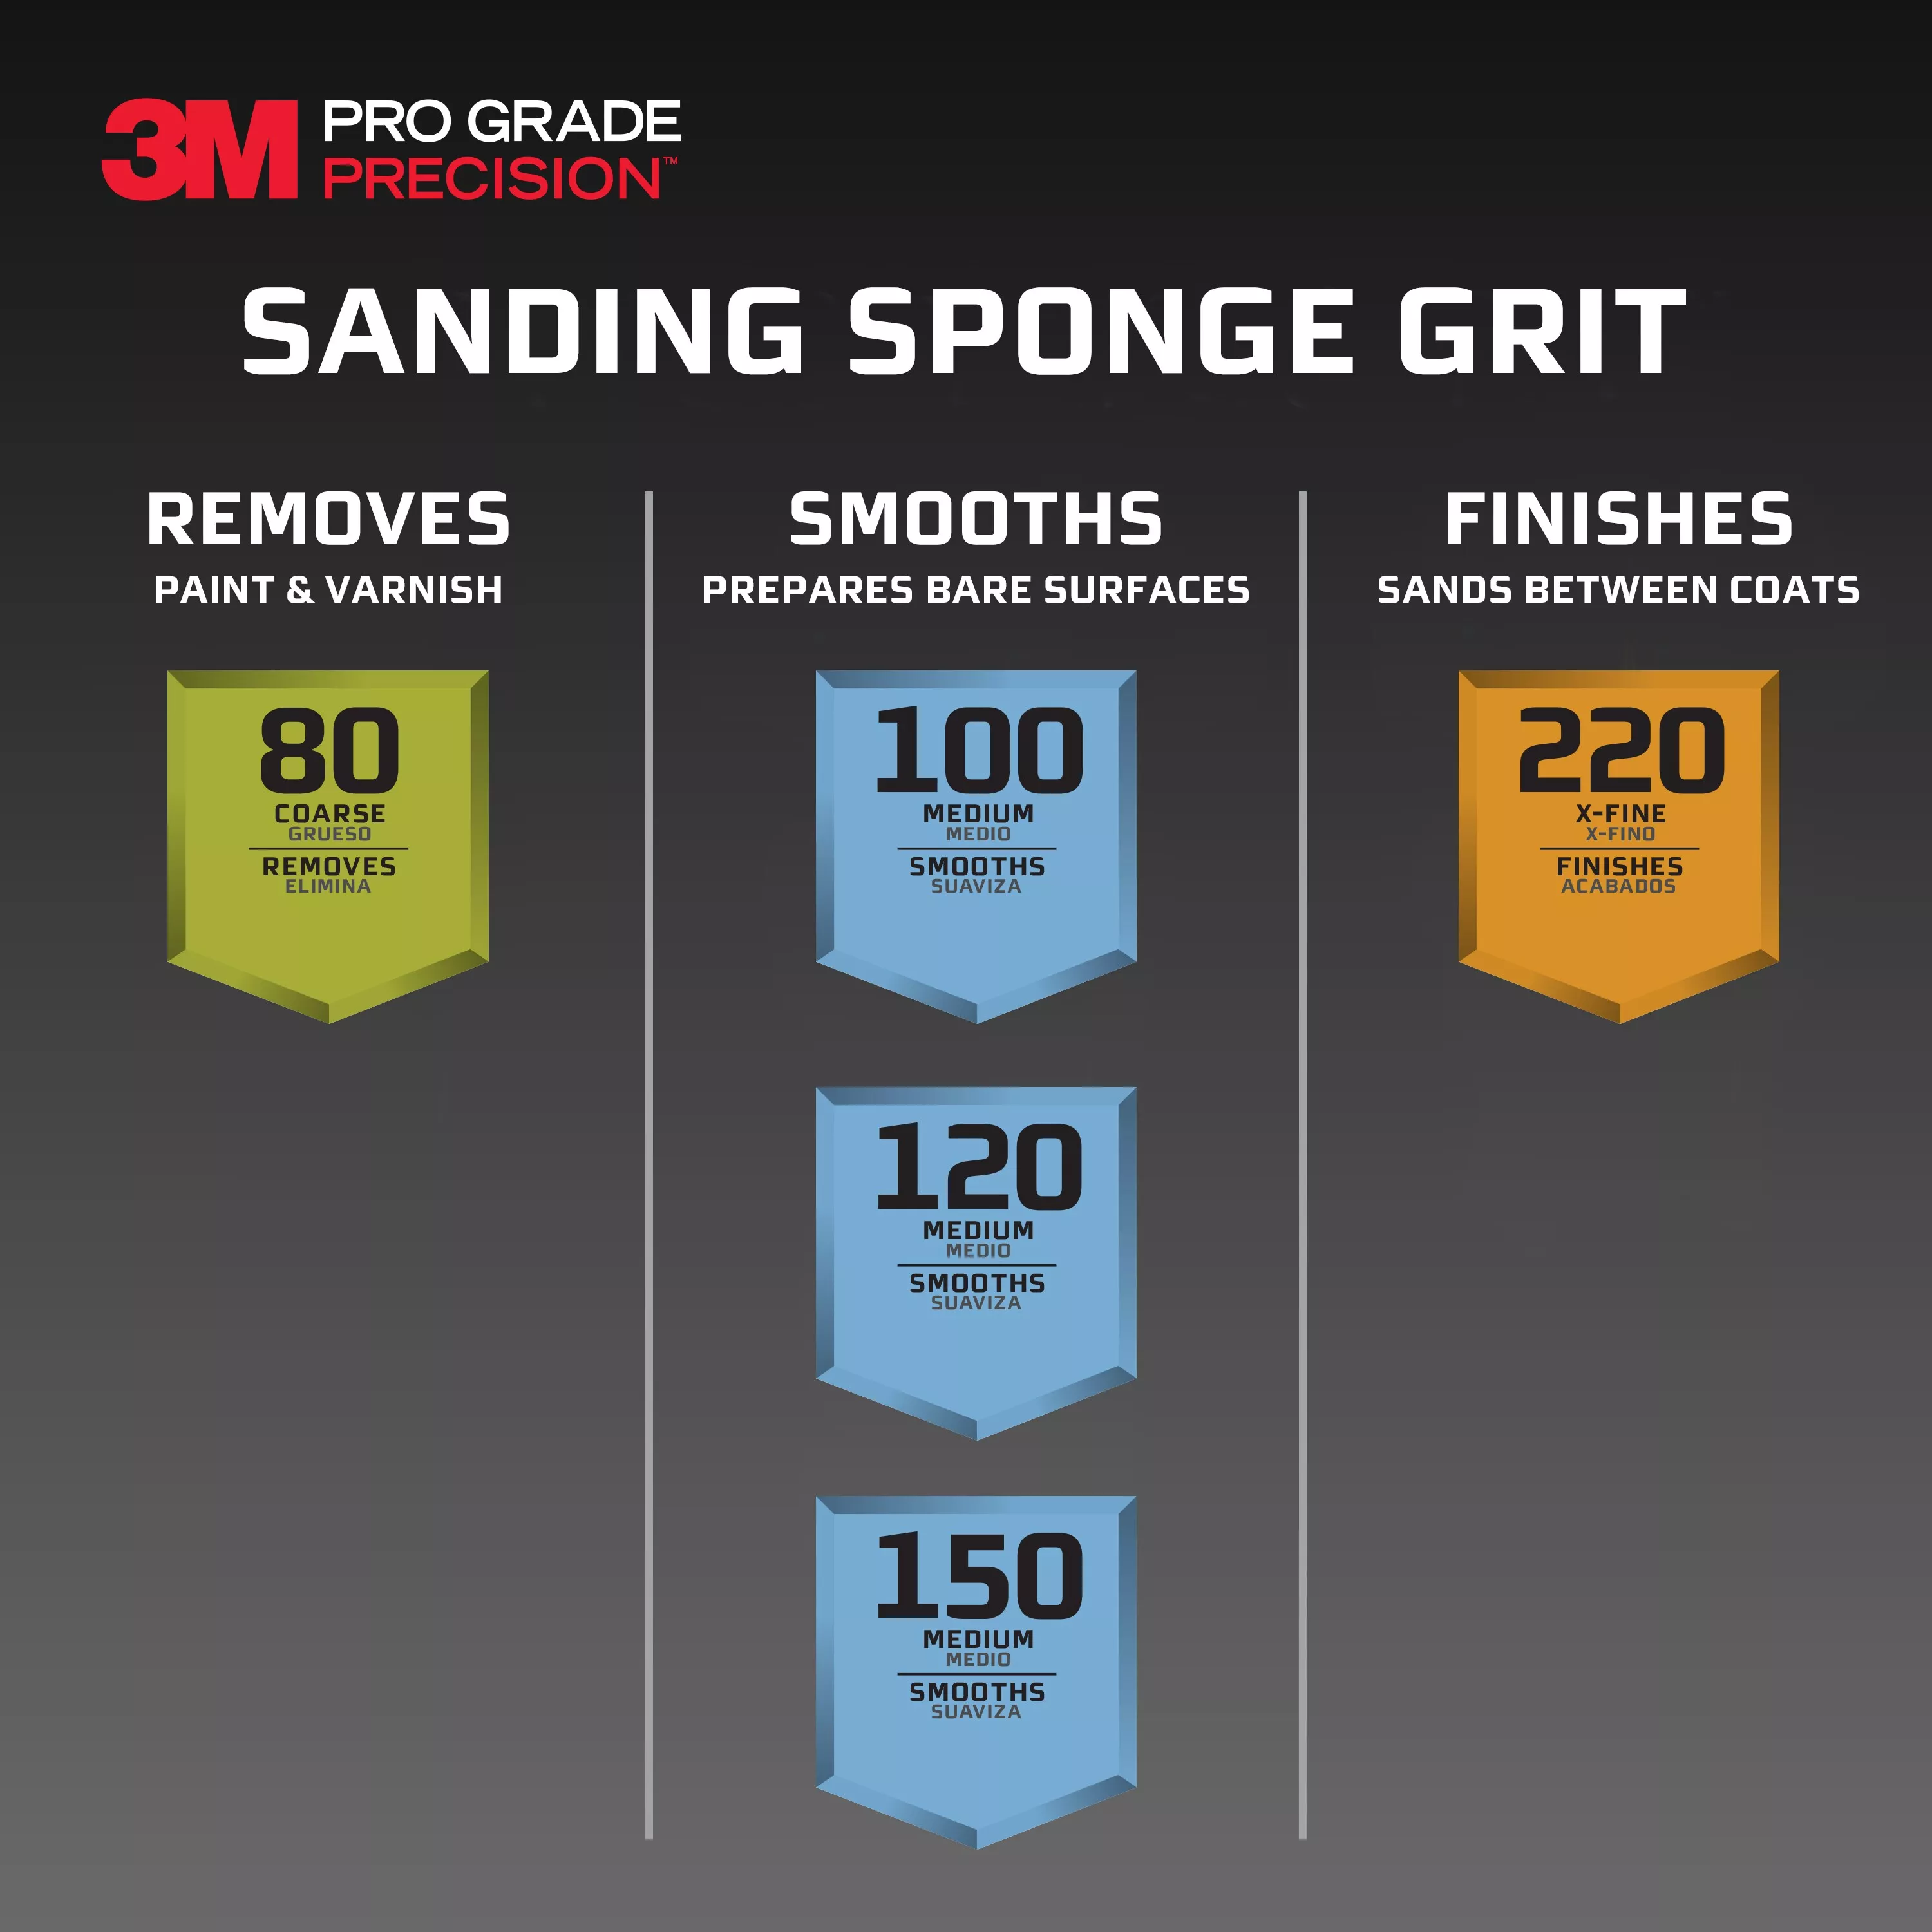 SKU 7100170034 | 3M™ Pro Grade Precision™ Faster Sanding Block Sponge